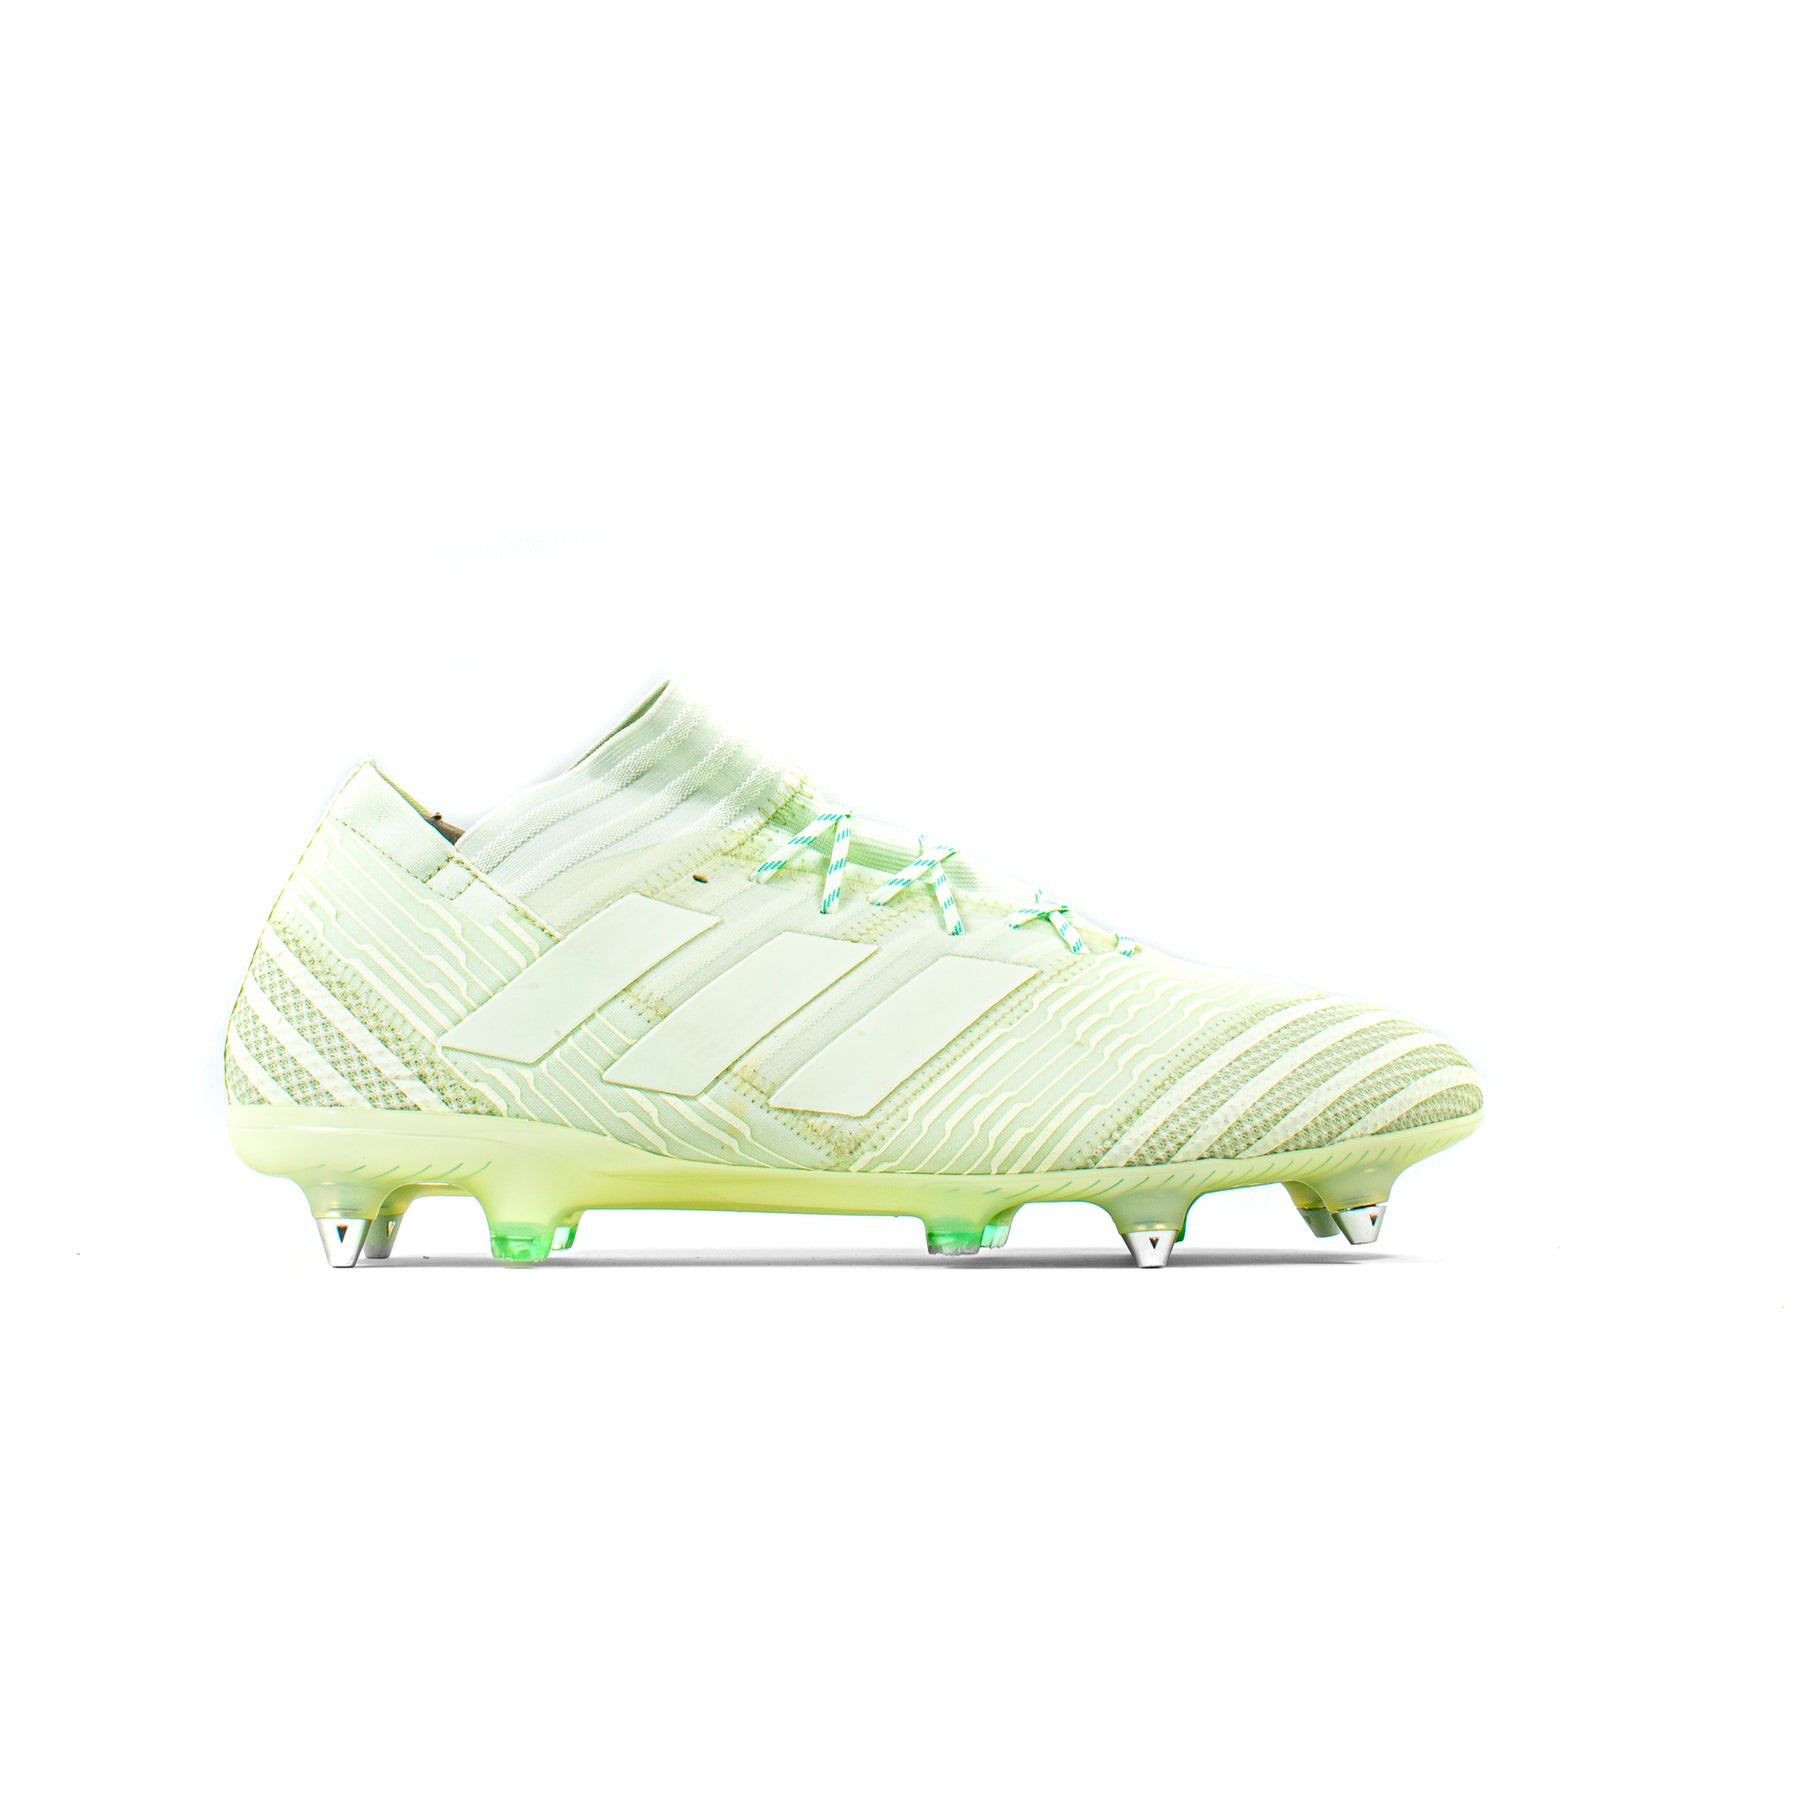 Opsplitsen hurken Installeren Adidas Nemeziz 17.1 Green SG – Classic Soccer Cleats